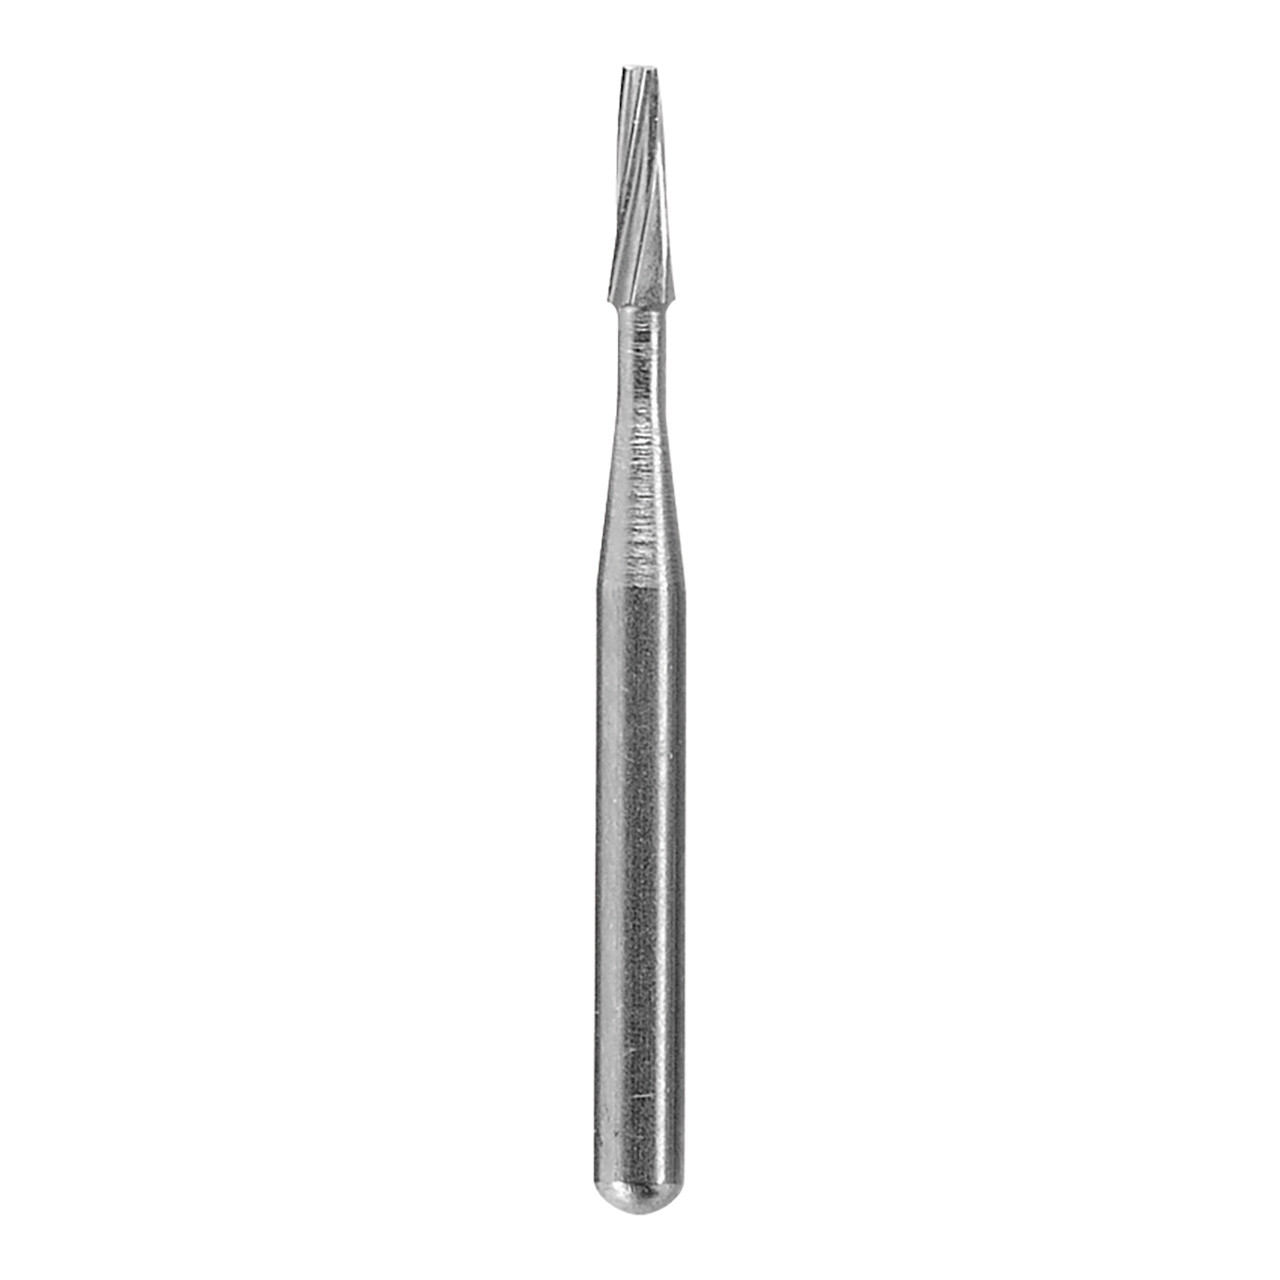 Cone Square 0.46mm Carbide Friction Grip Bur 1/16" Shank